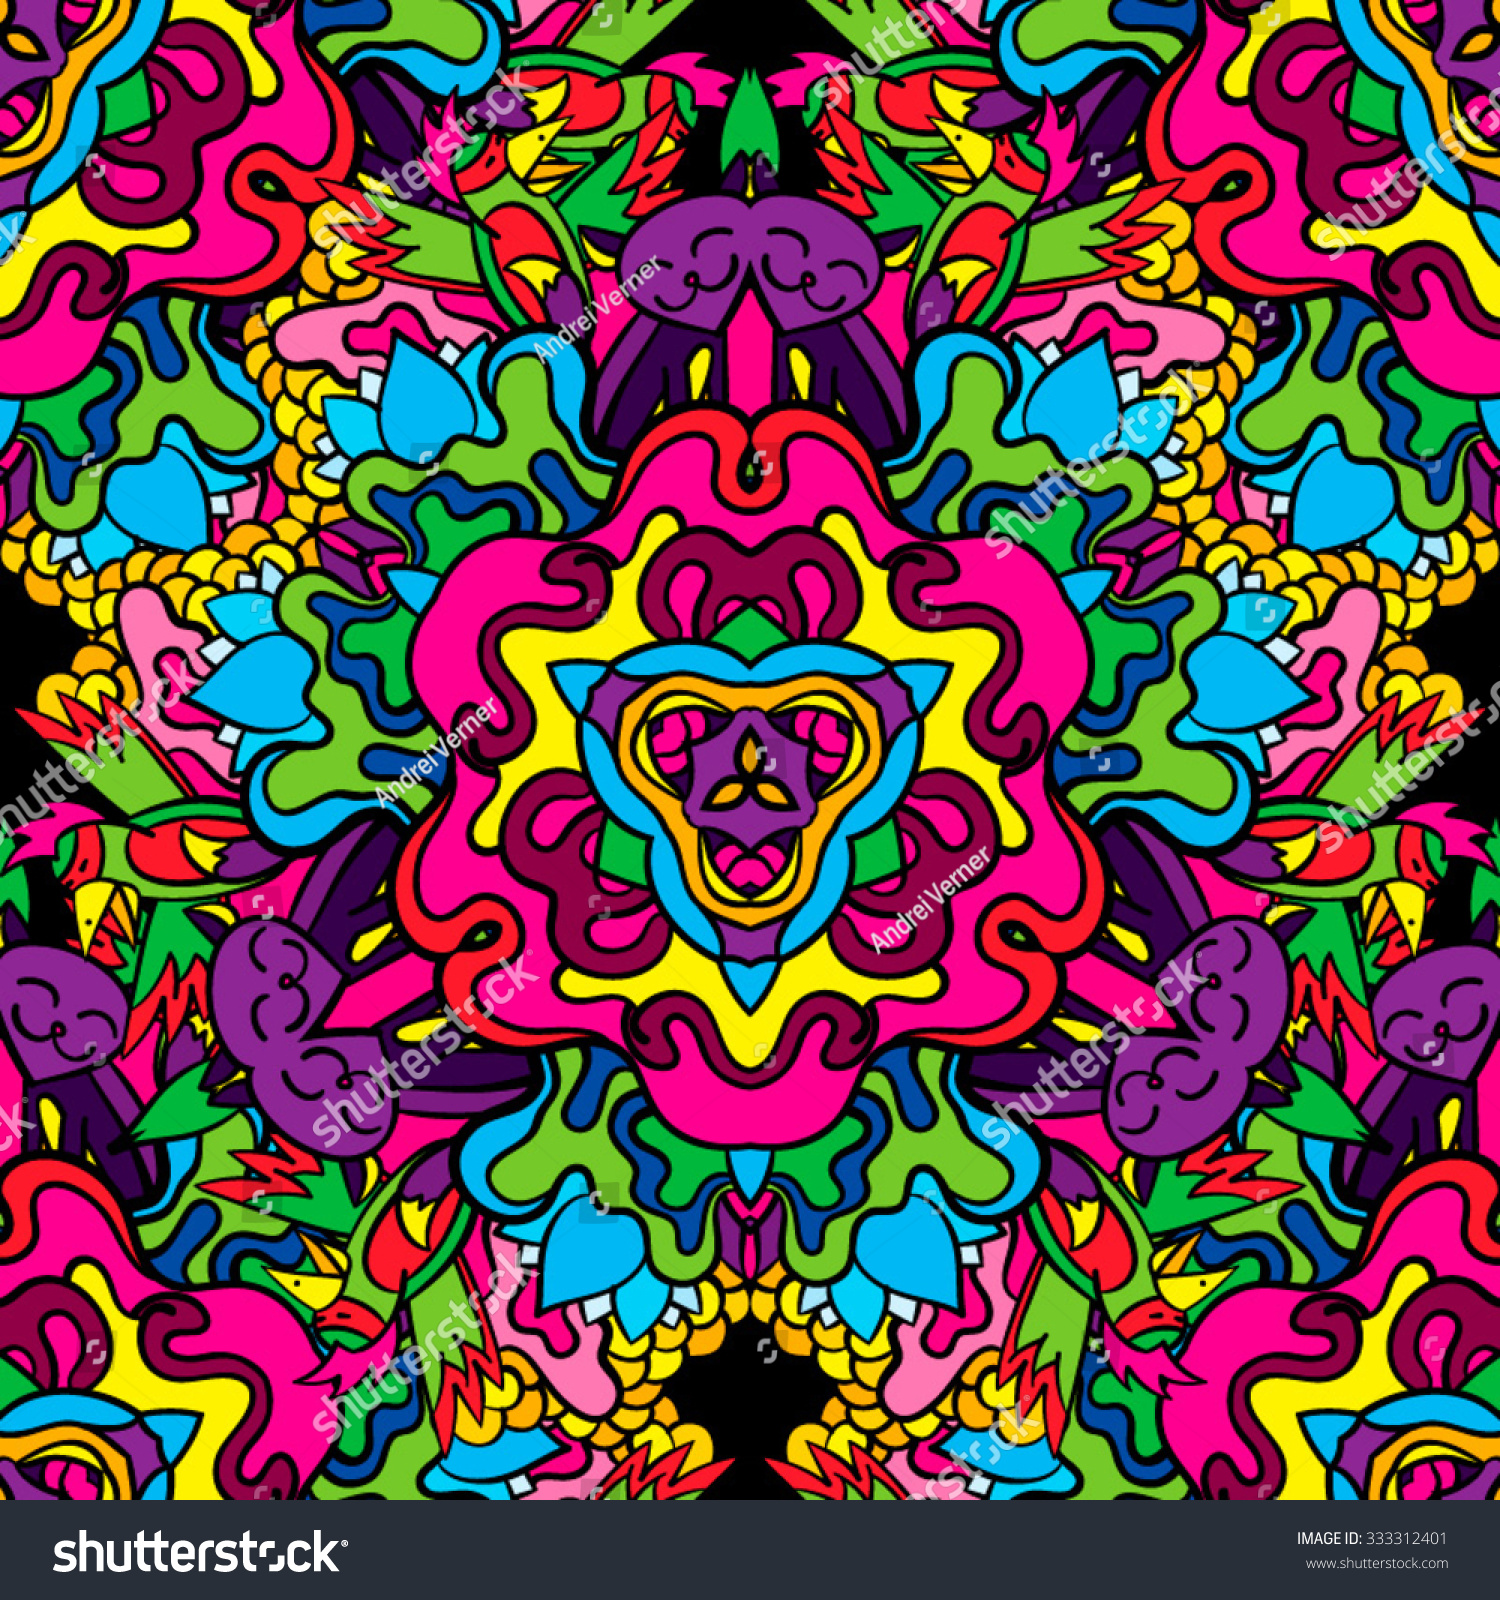 60s Hippie Psychedelic Art Seamless Pattern Vector Illustration 333312401 Shutterstock